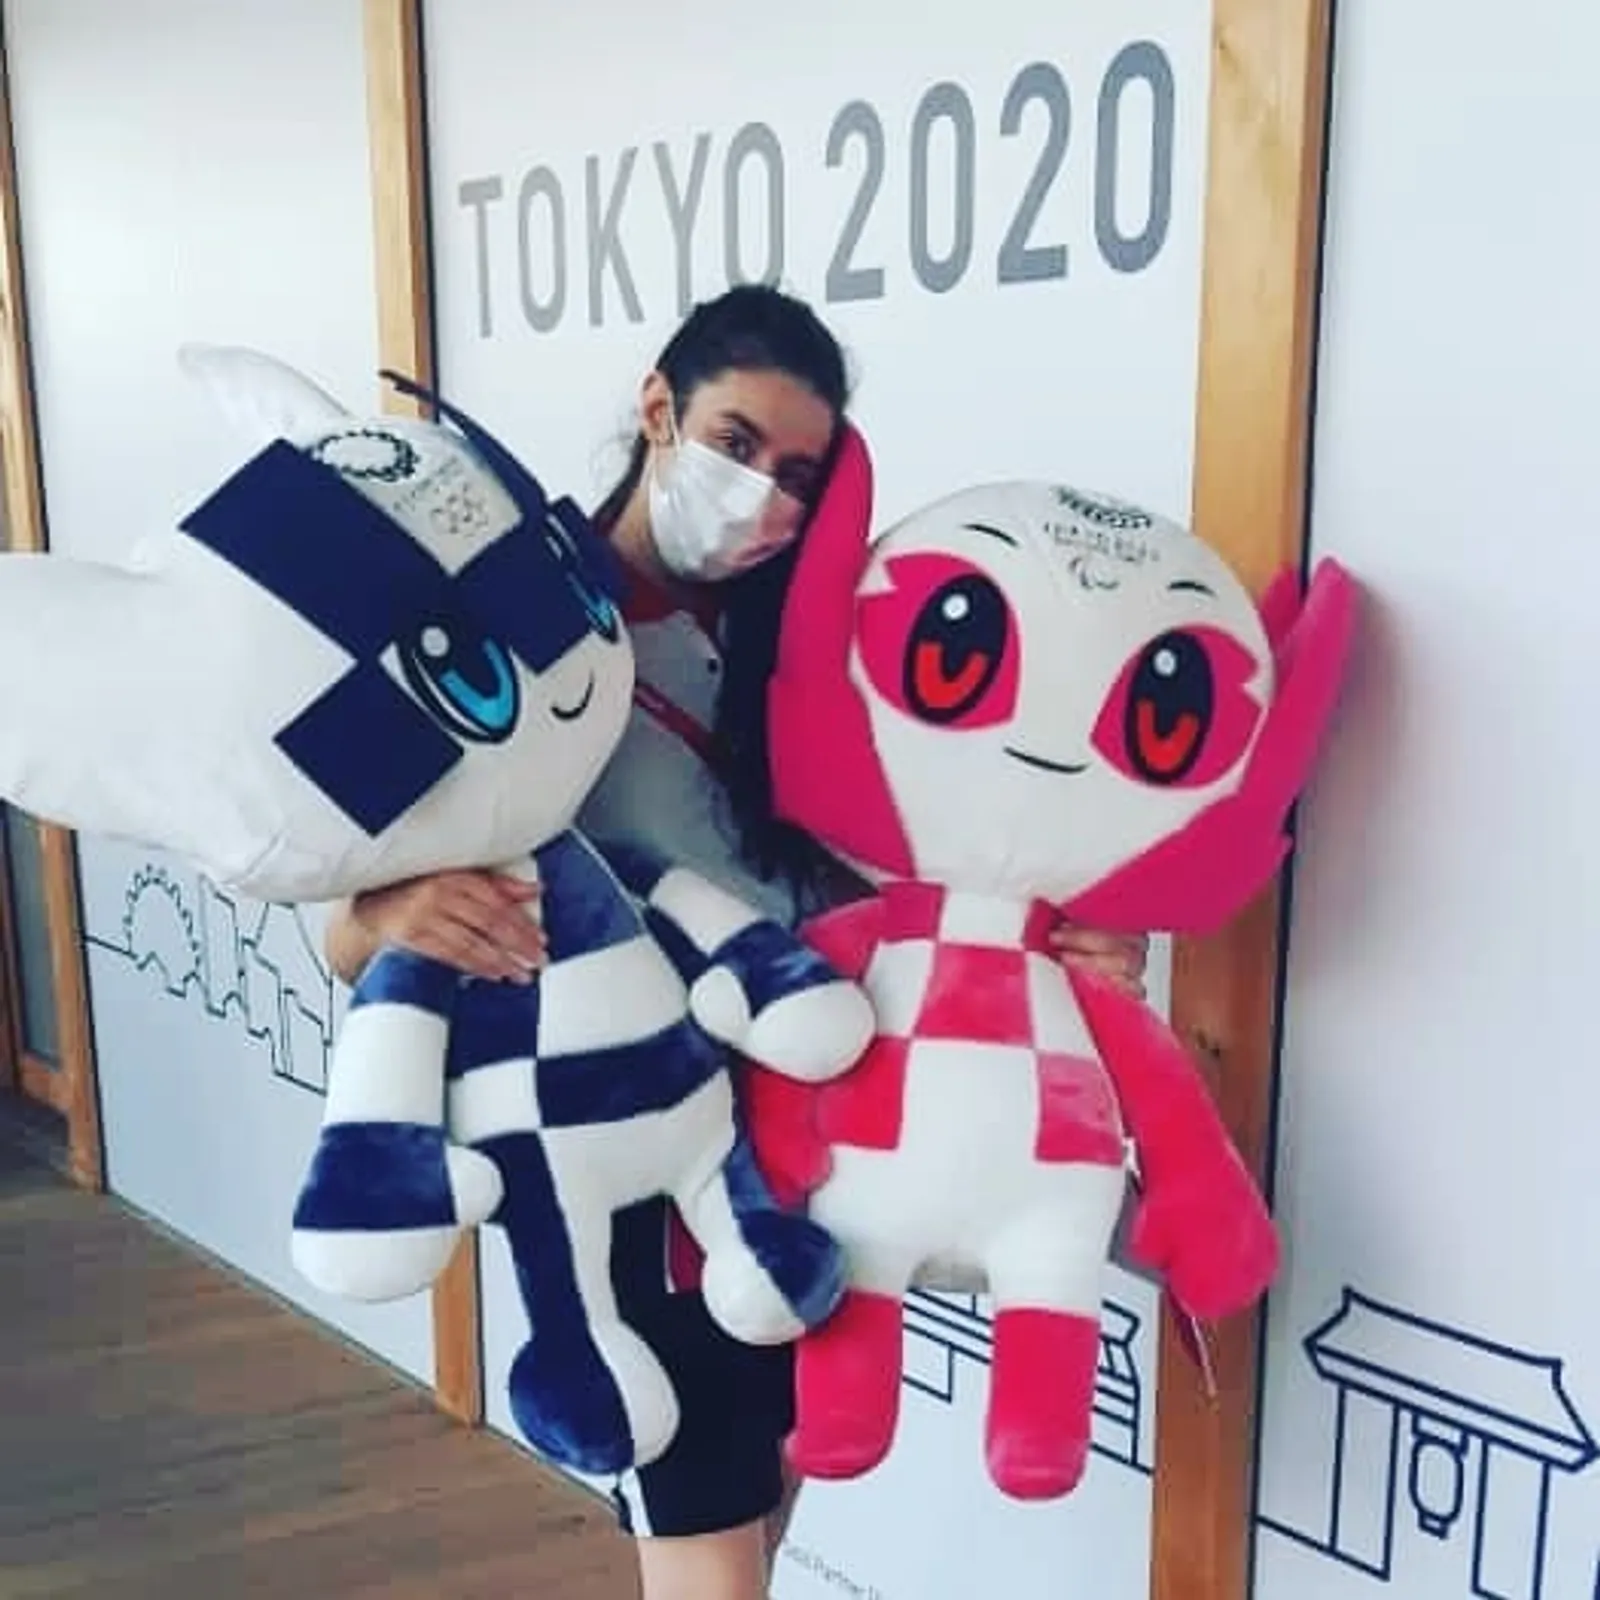 Intip Potret Hend Zaza, Atlet Termuda di Olimpiade Tokyo 2020